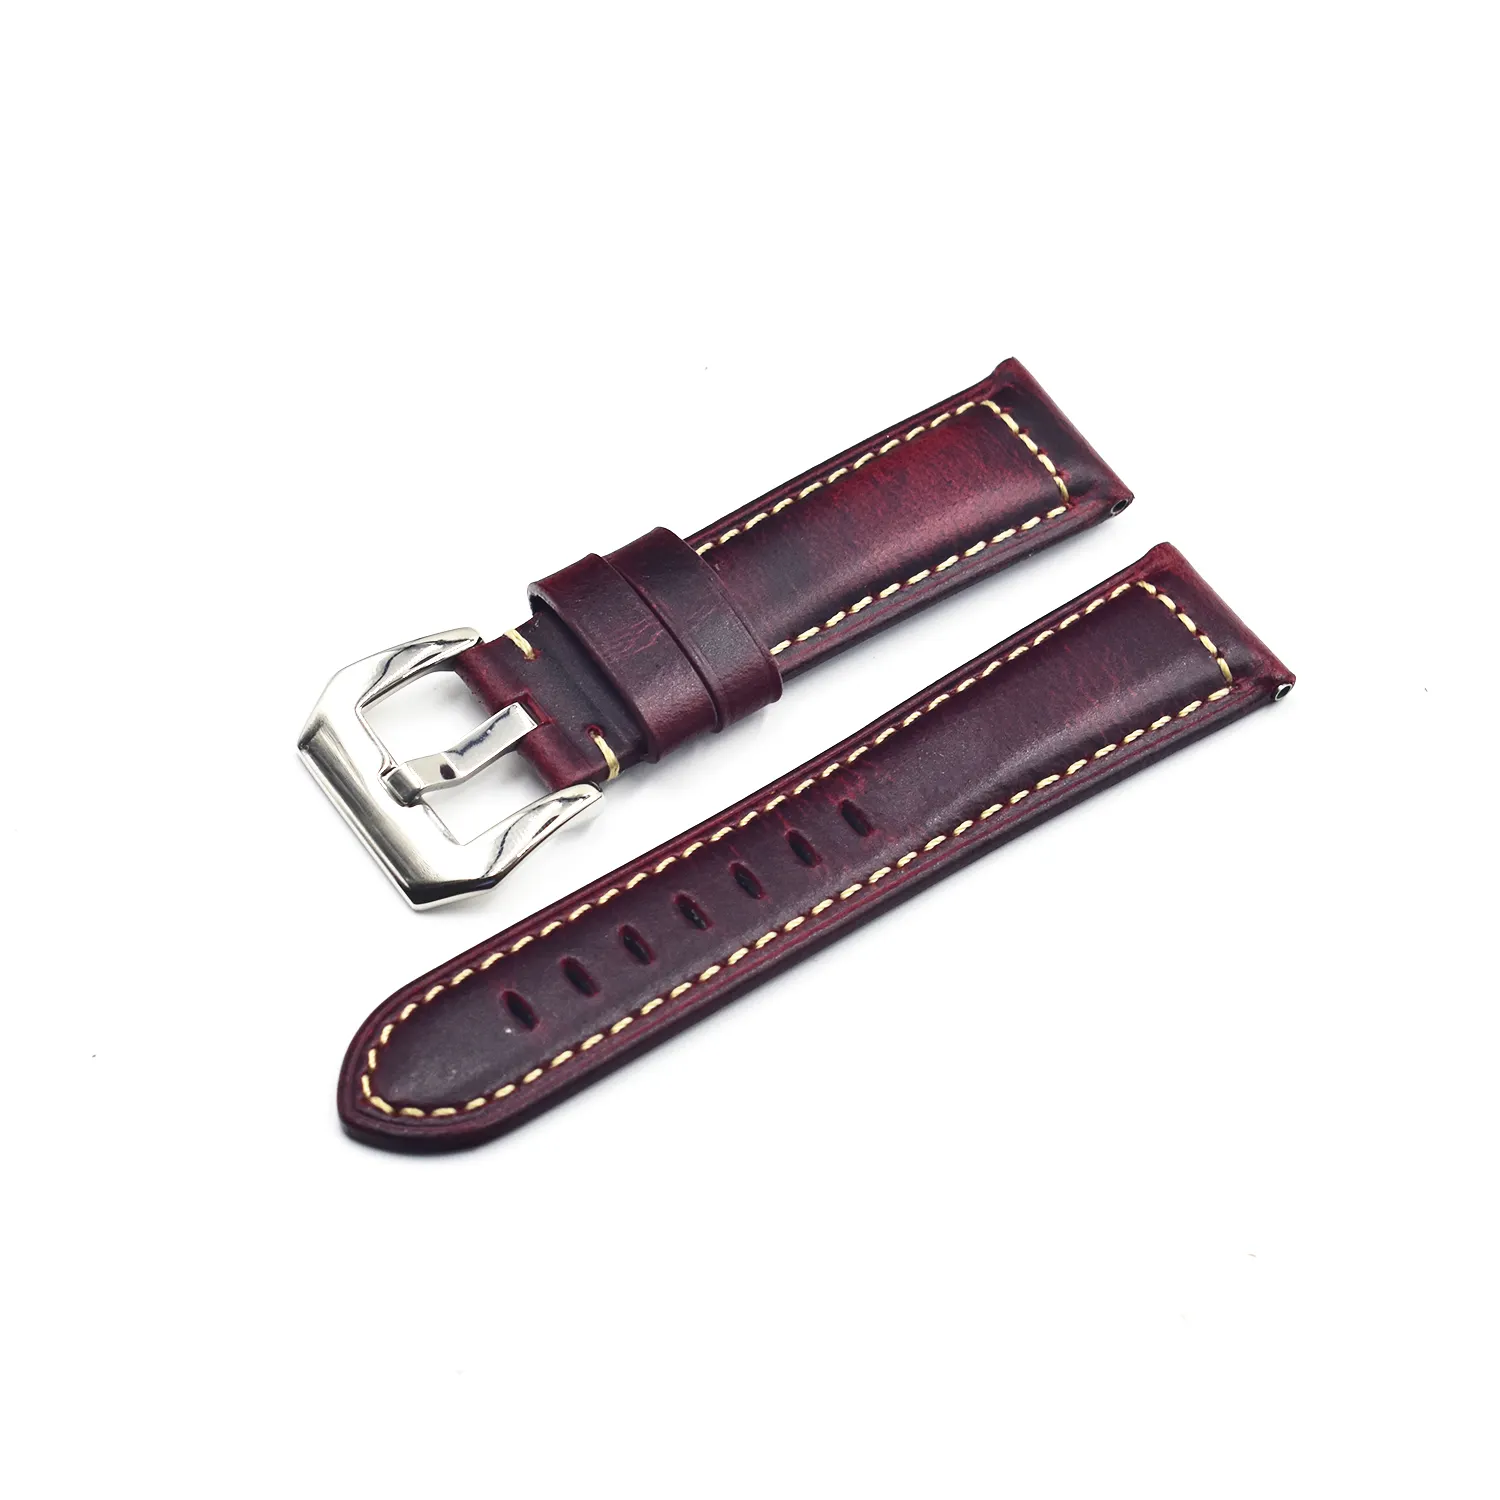 Vintage Style Crazy Horse Leather Men's Wrist Watch Bands 20mm 22mm Vintage Leather Watch band for Panarai watch